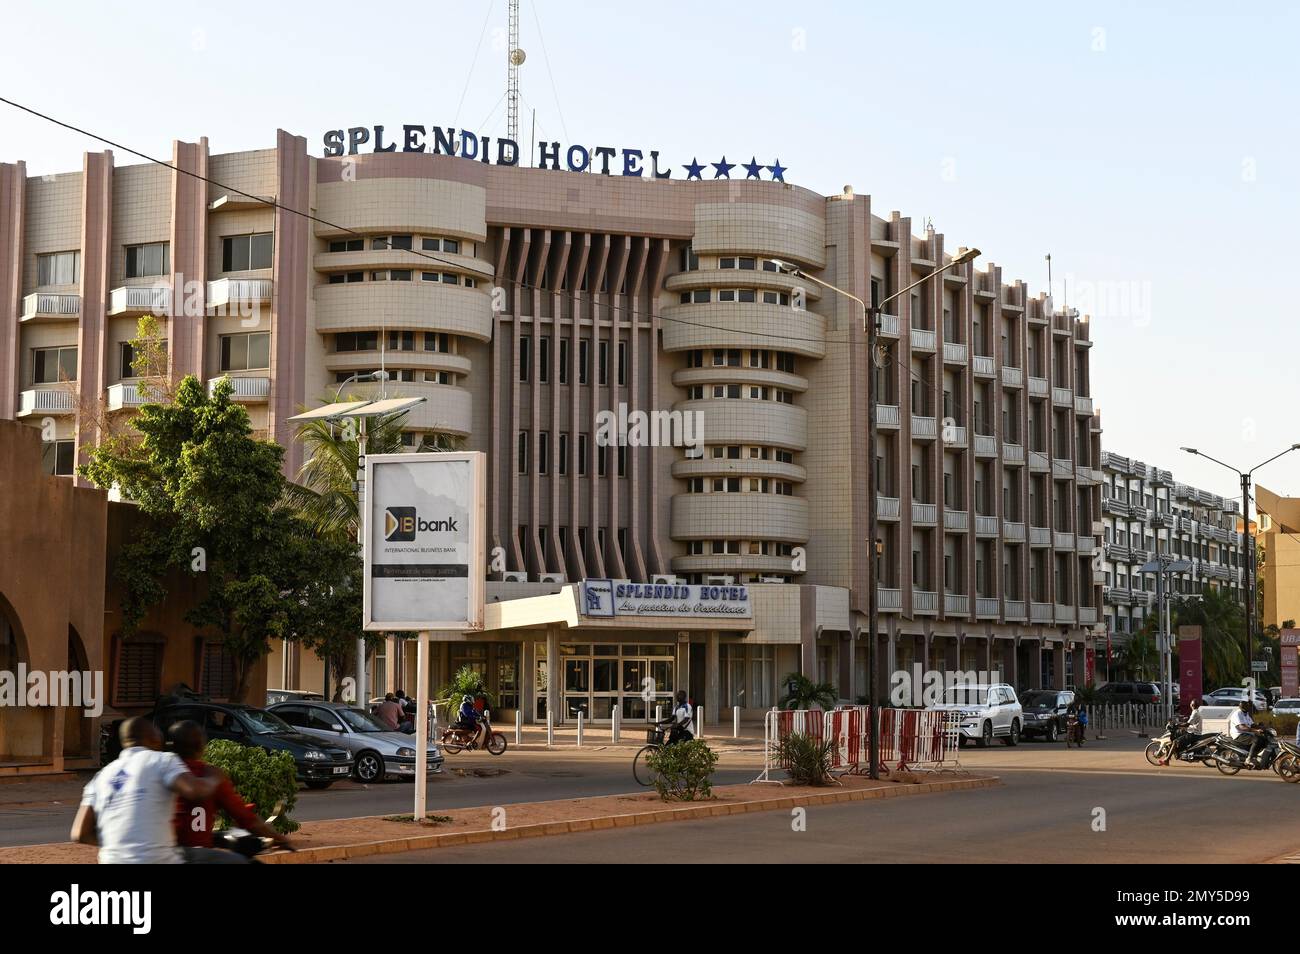 BURKINA FASO, Ouagadougou, Avenue Kwame Nkrumah, Splendid Hotel, das 2016 von islamistischen Terroristen angegriffen wurde Stockfoto